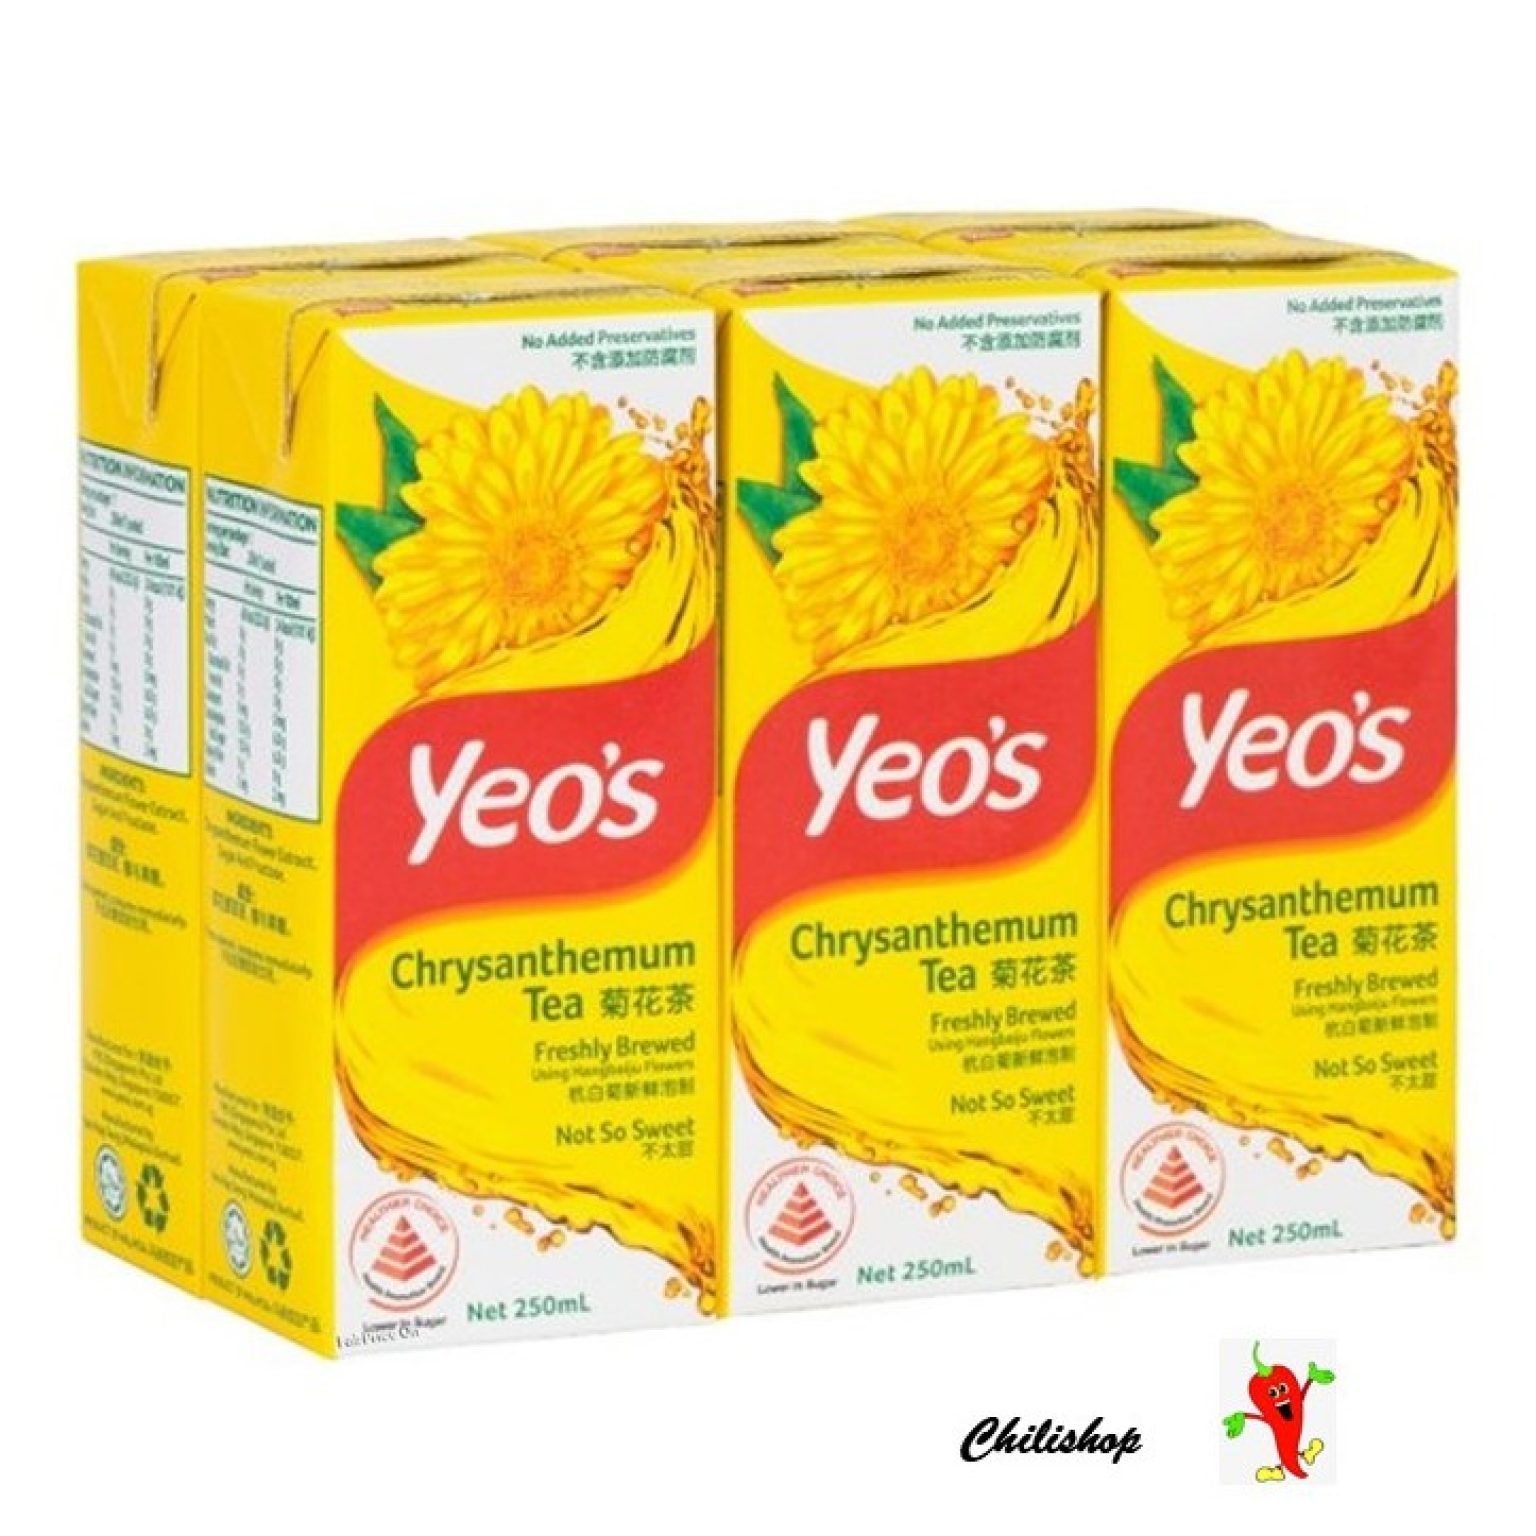 yeos 250ml chrysanthemum tea (c) 4×6 – OneSHOP